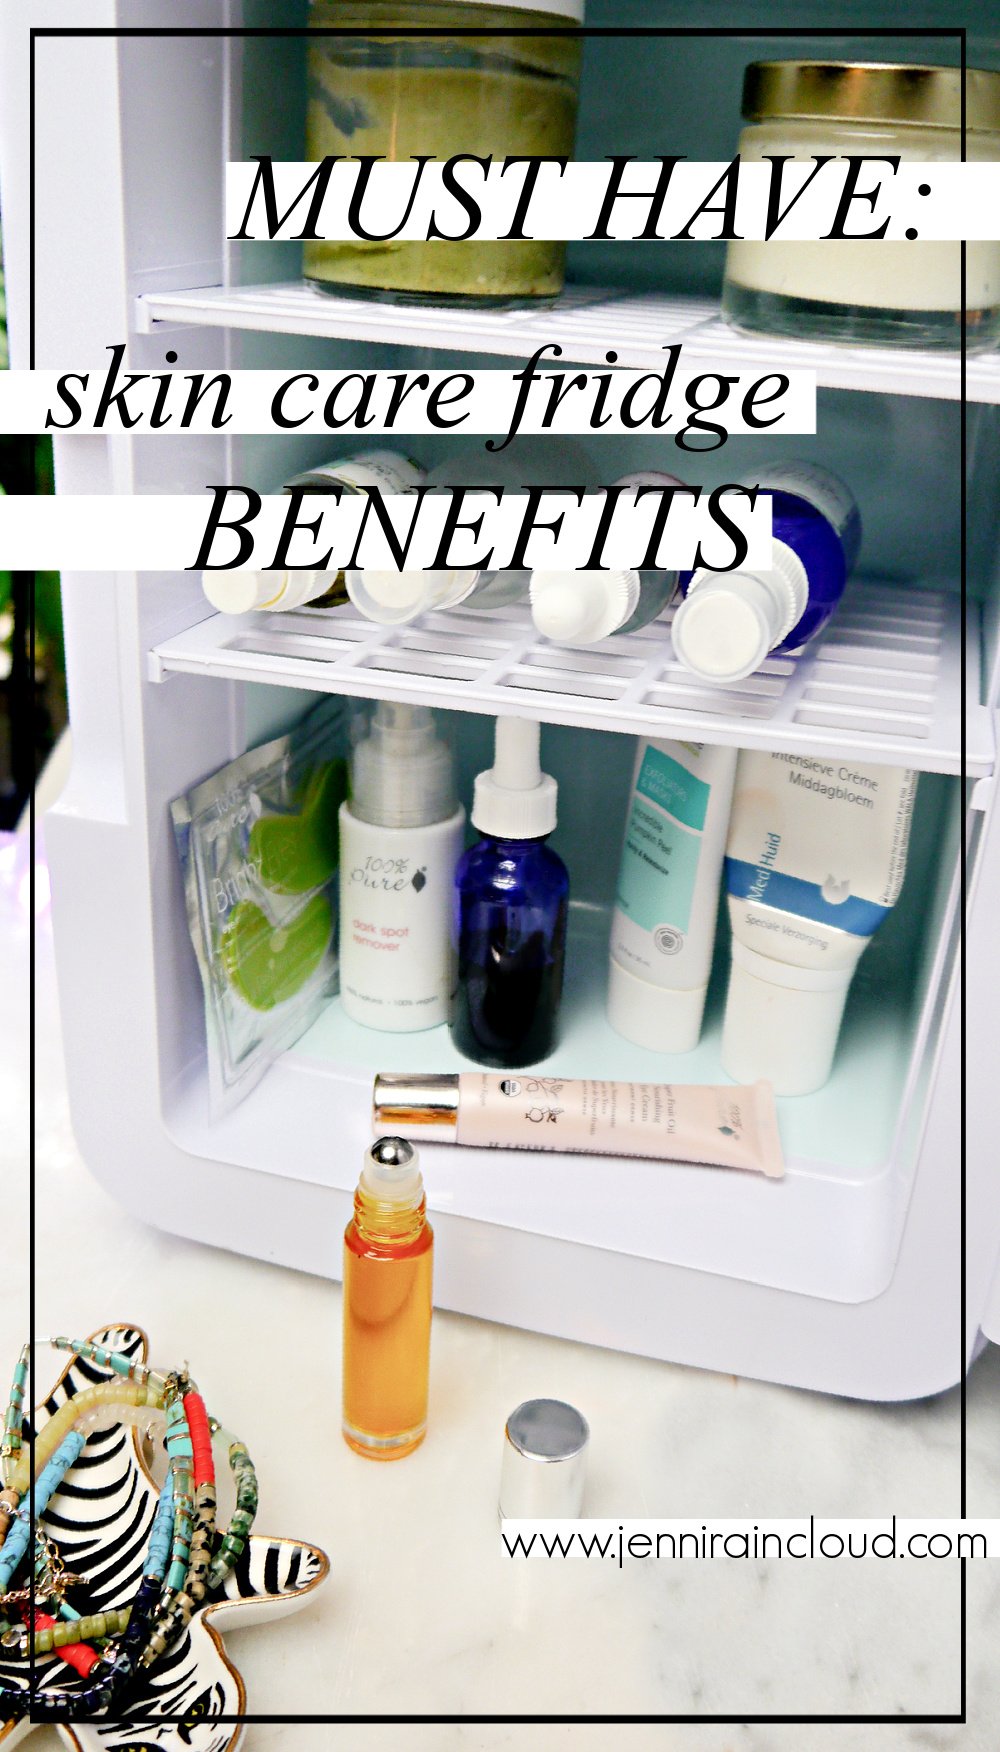 Benefits of a Skin Care Fridge Pinterest